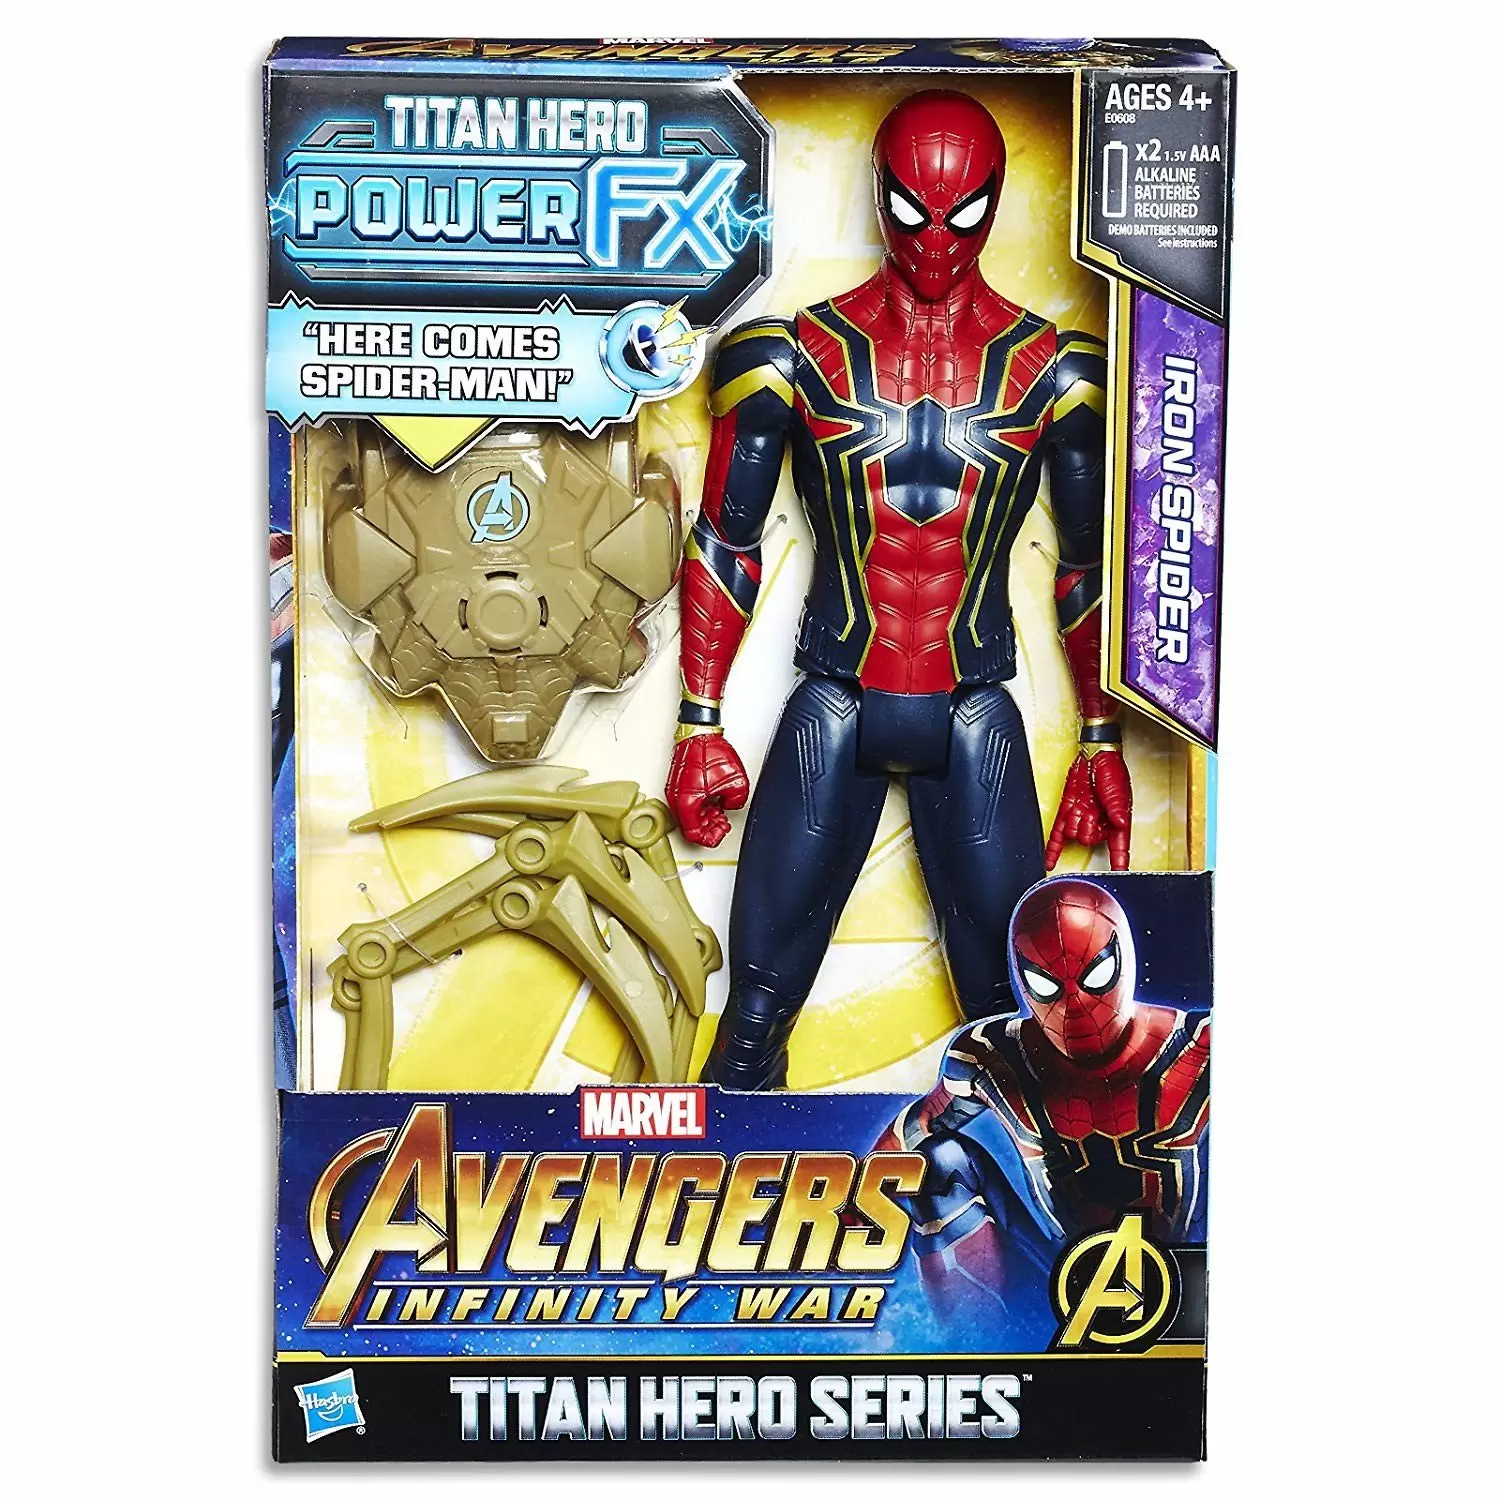 Titan Hero Series - Iron Spider Power FX - Avengers Infinity Wars